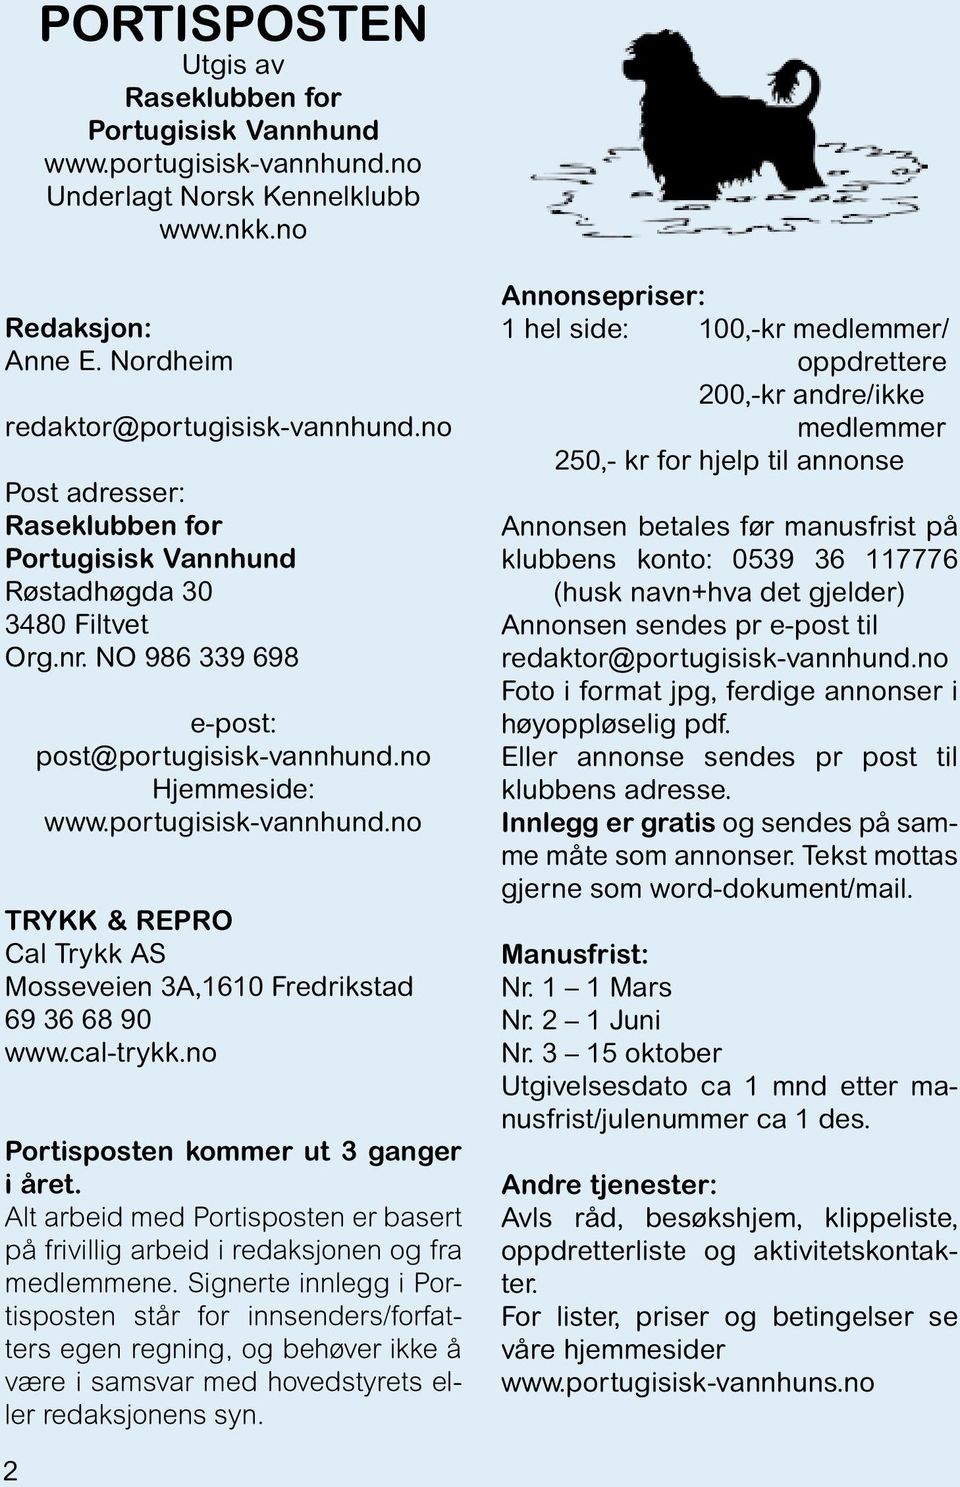 PORTISPOSTEN MEDLEMSBLAD RASEKLUBBEN FOR PORTUGISISK VANNHUND. HUSK:  Årsmøte! - PDF Free Download